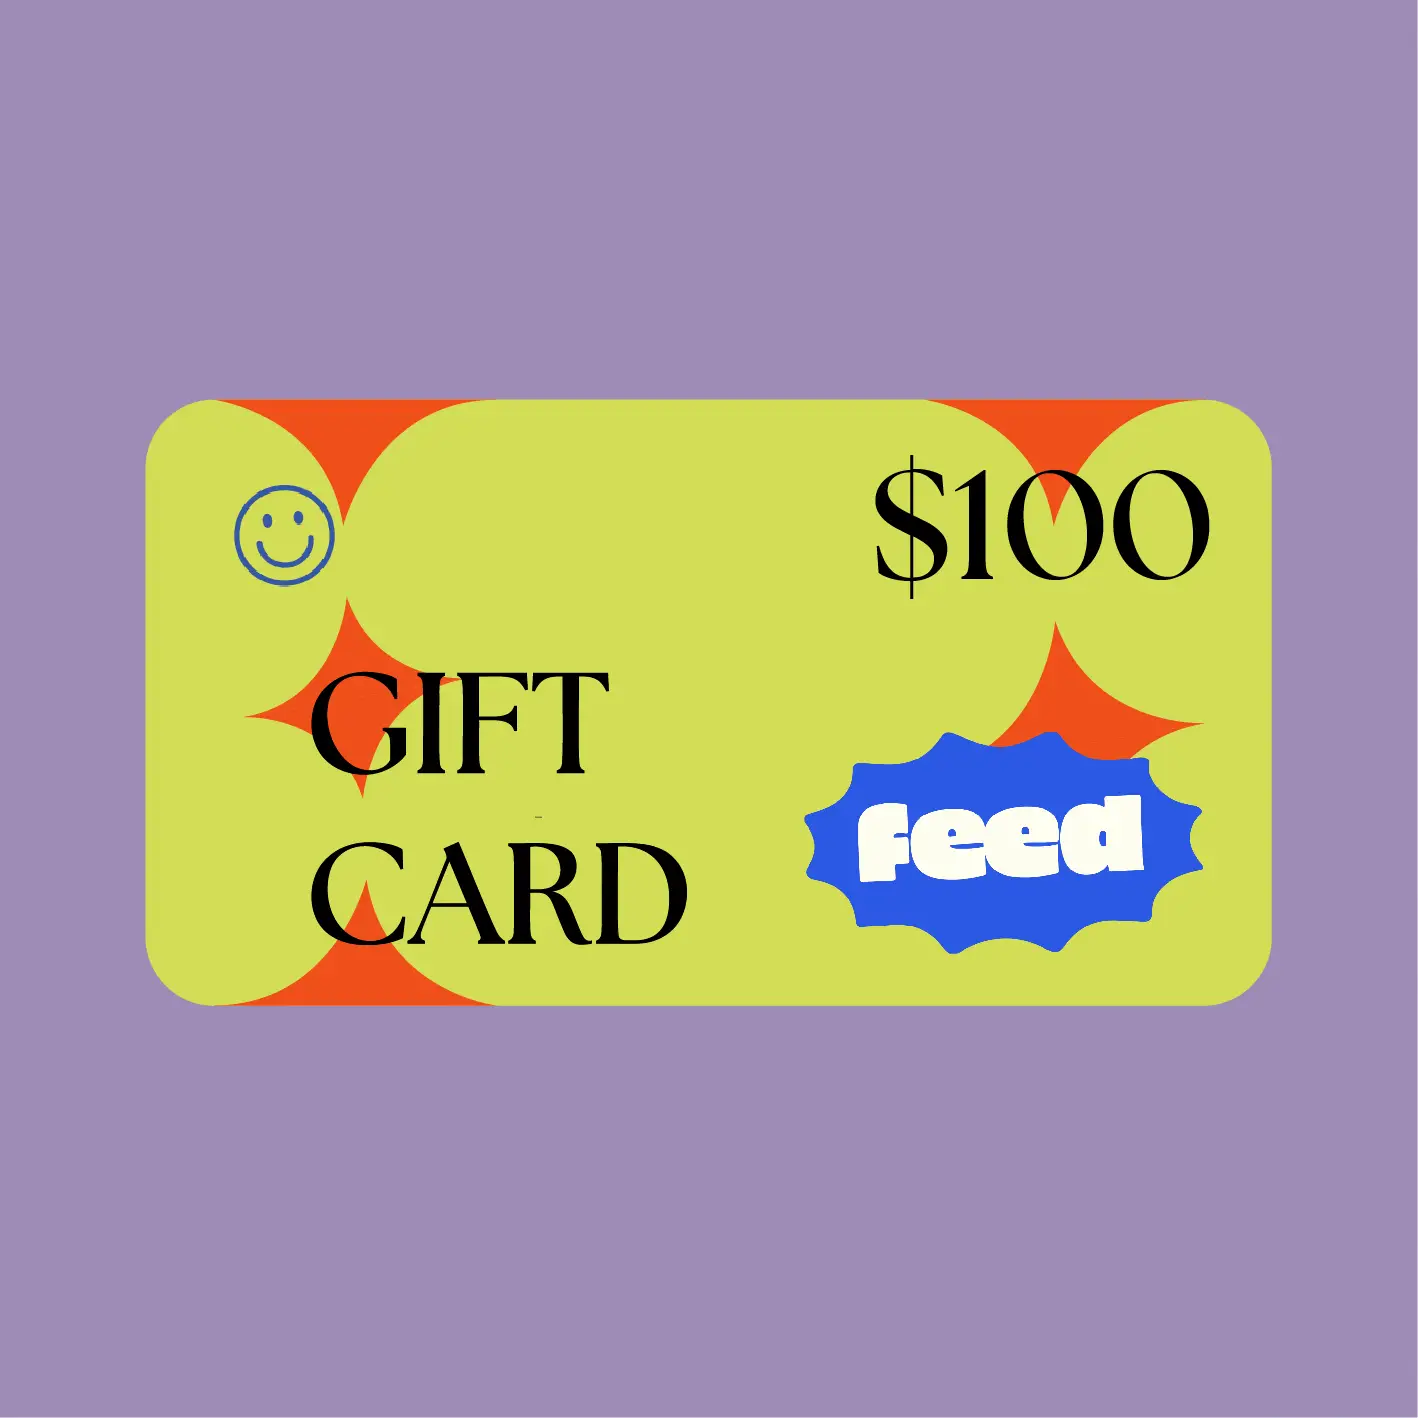 Feed $100 Gift Card